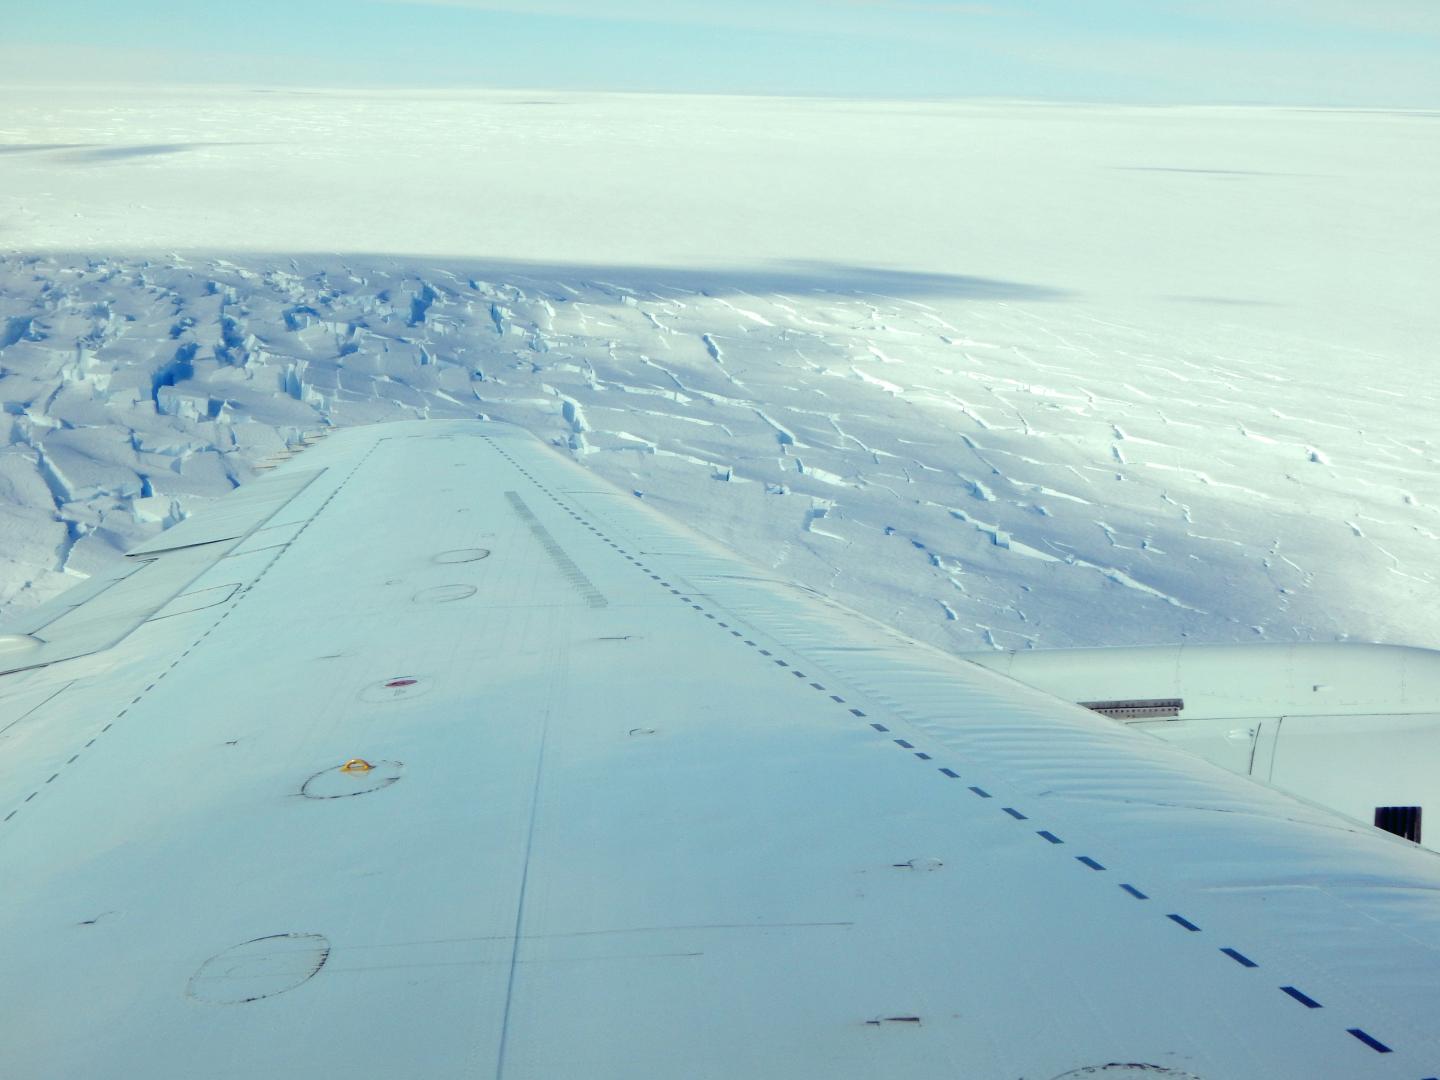 Cloud's Shadow on Crevassed Antarctic Ice